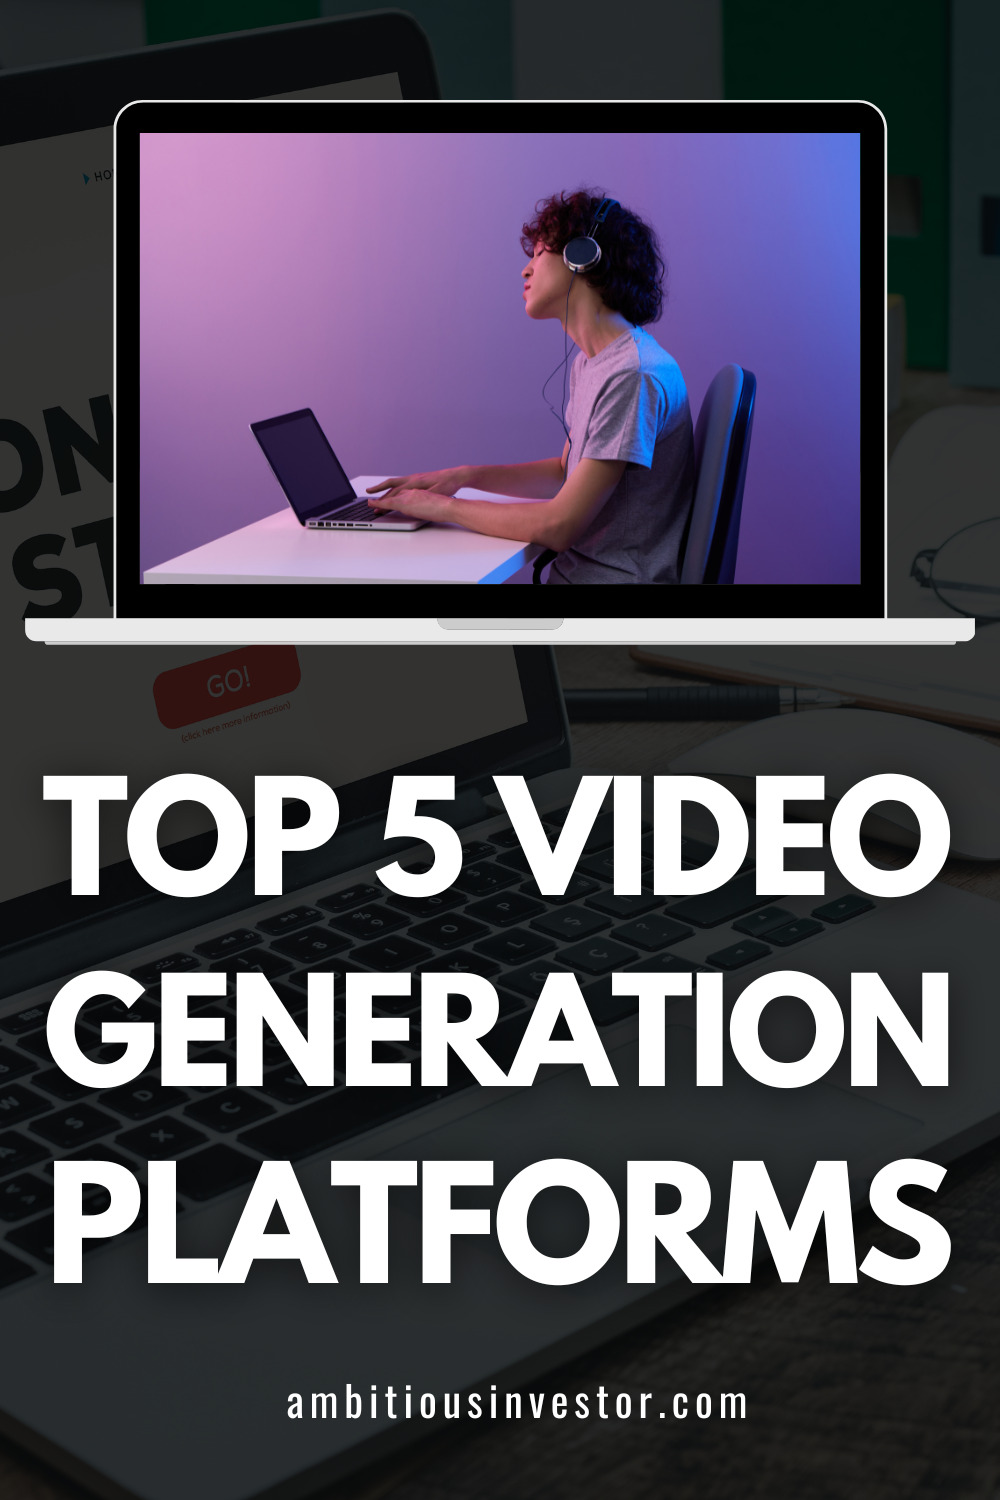 Top 5 Video Generation Platforms